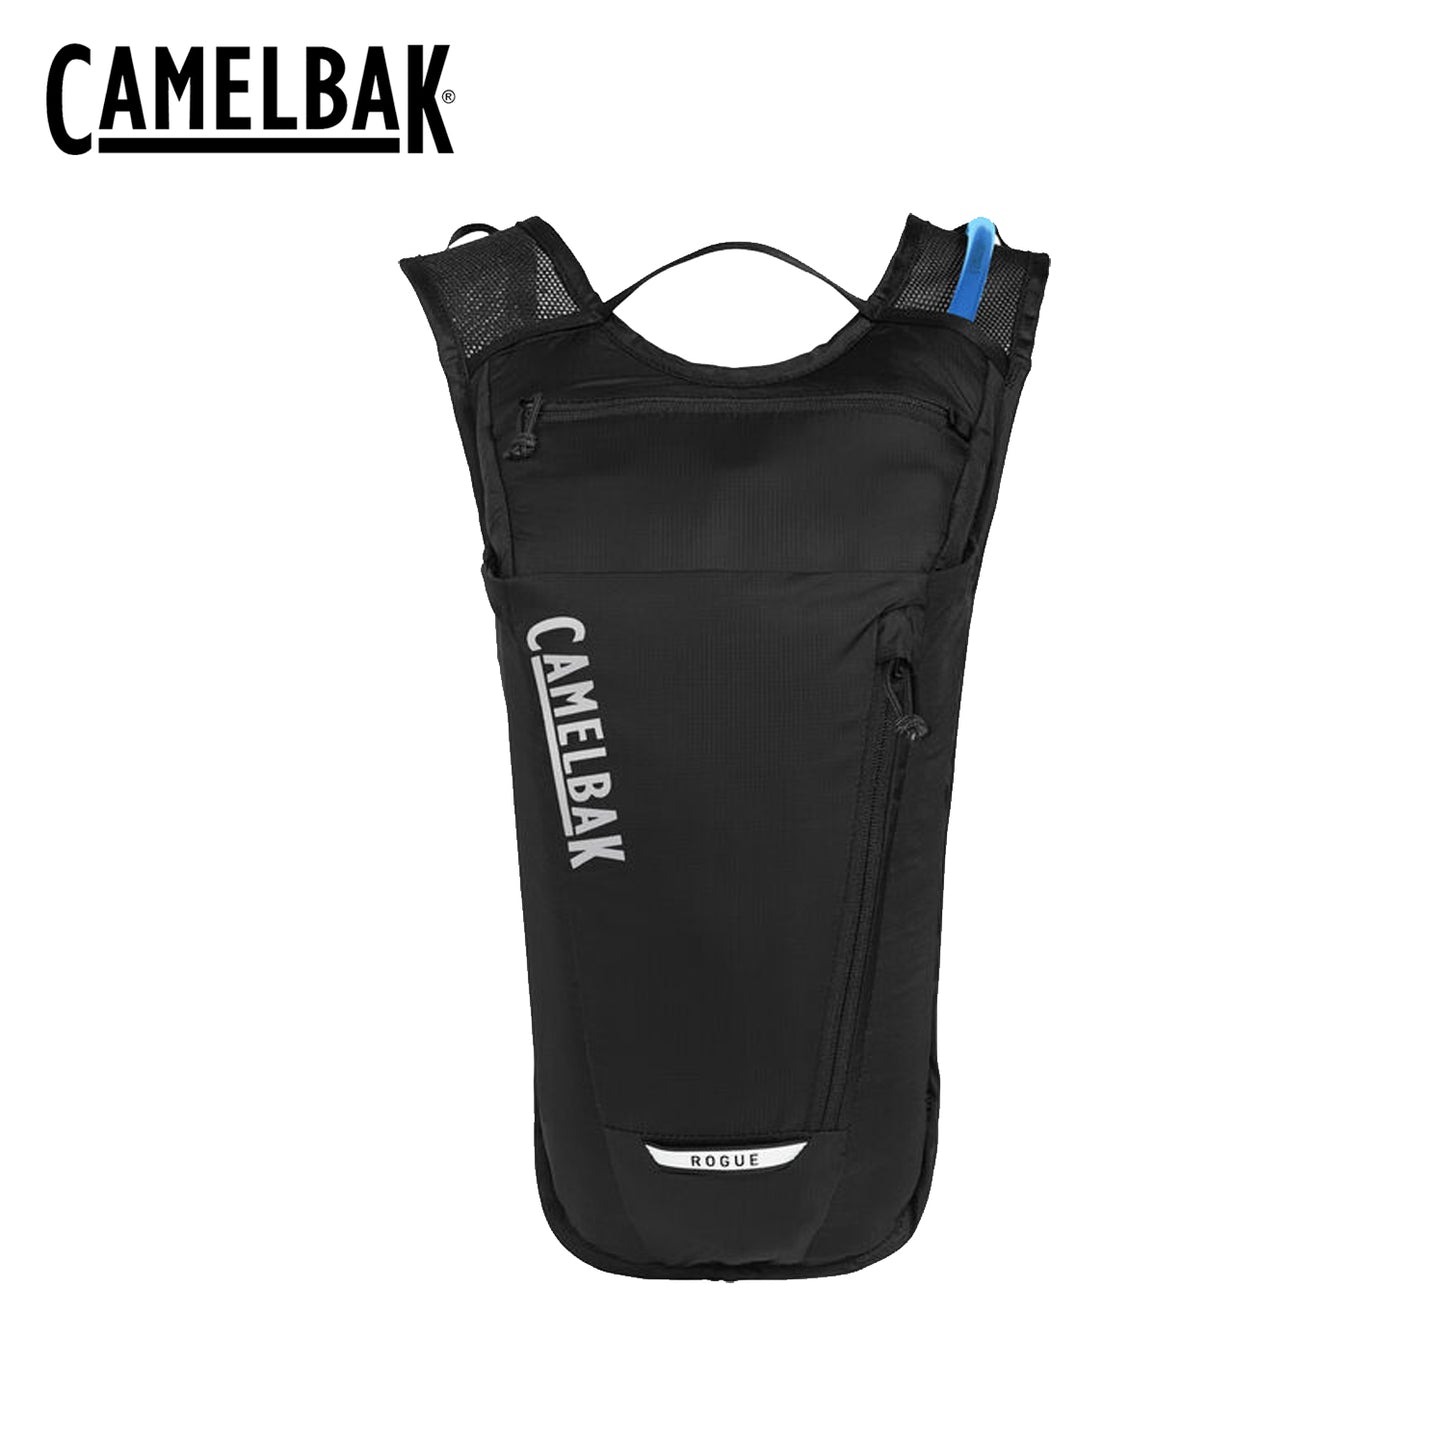 CamelBak Rogue Light 70oz Hydration Pack - Black/Silver